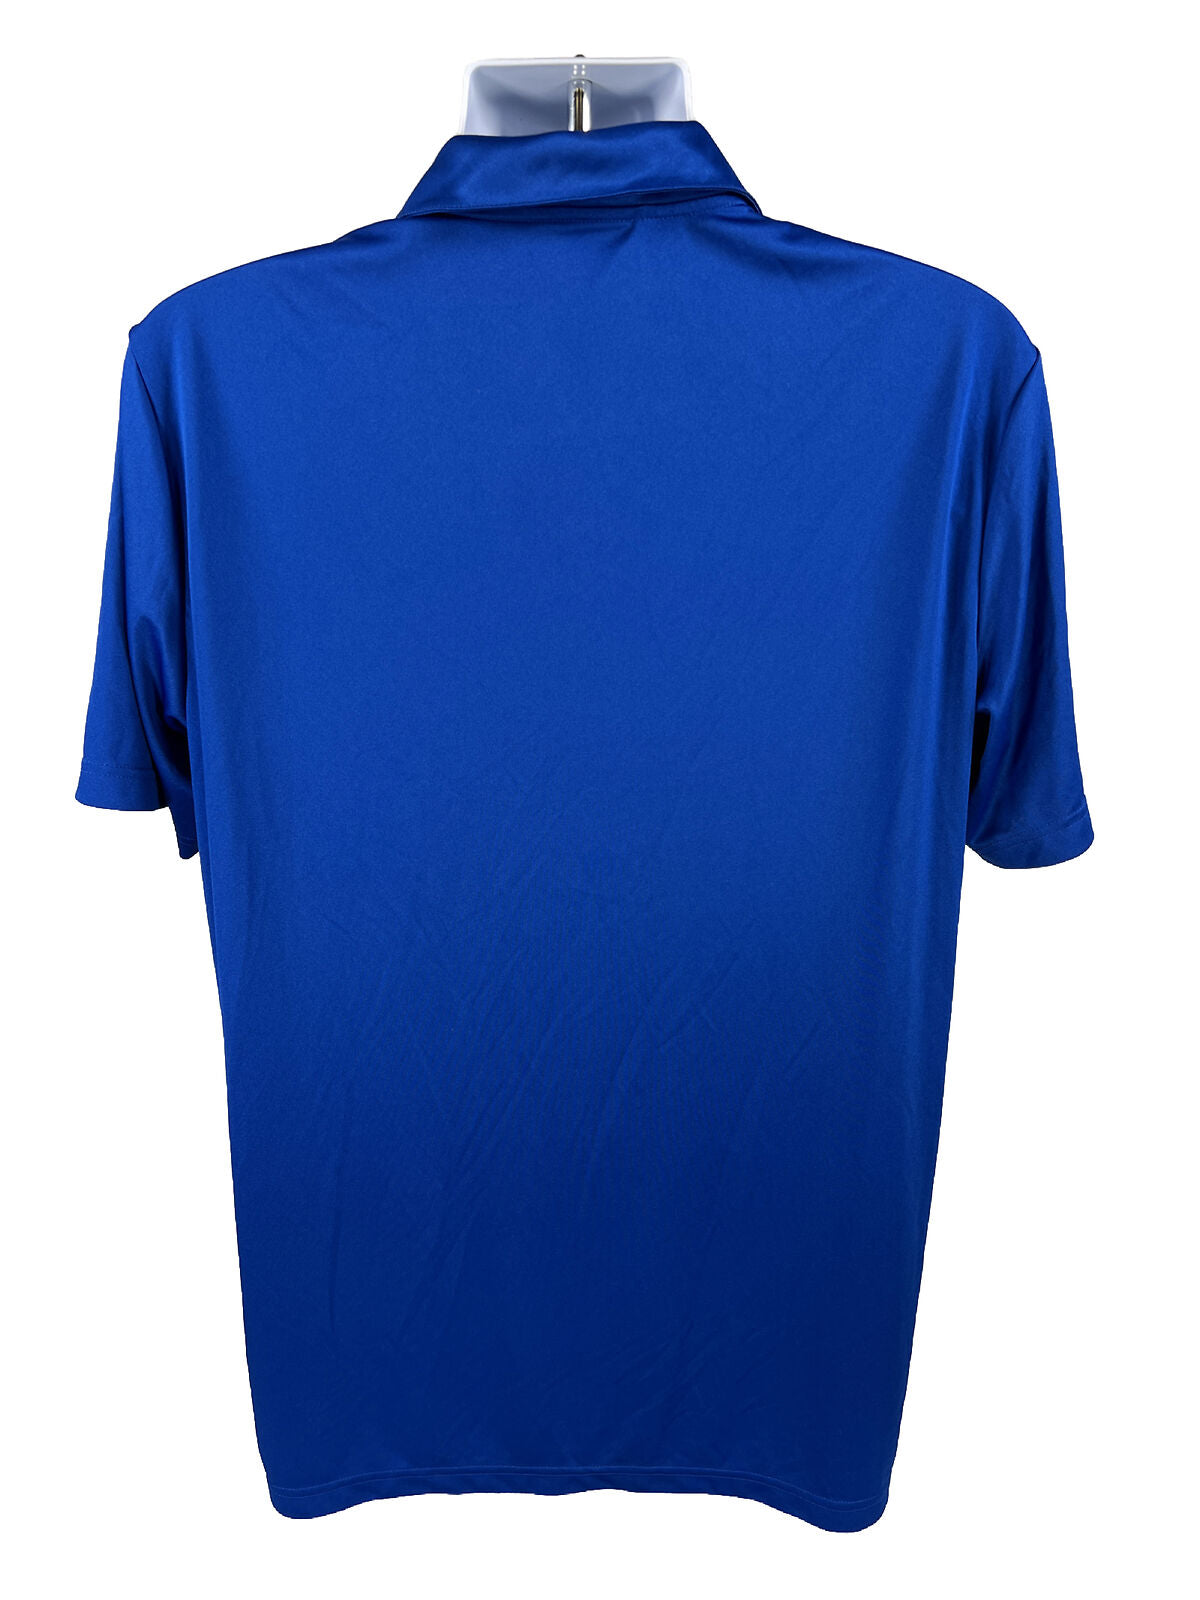 adidas Men's Blue Short Sleeve Polyester Golf Polo Shirt - L